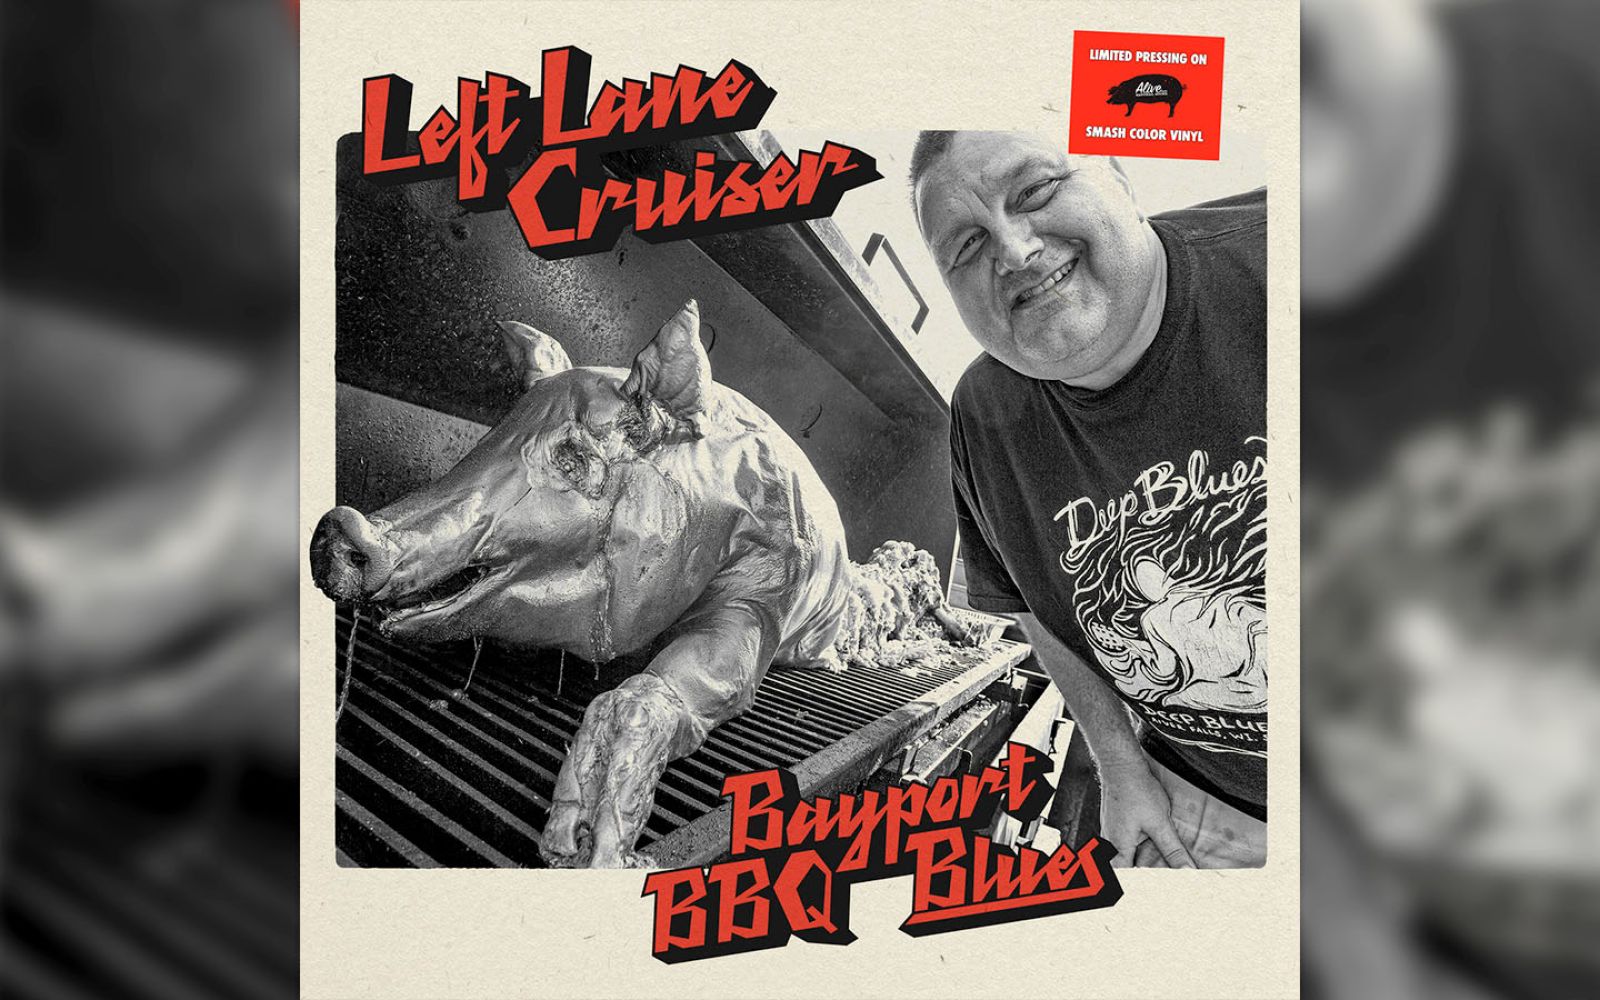 'Bayport BBQ Blues' is the latest effort from Fort Wayne's Left Lane Cruiser.